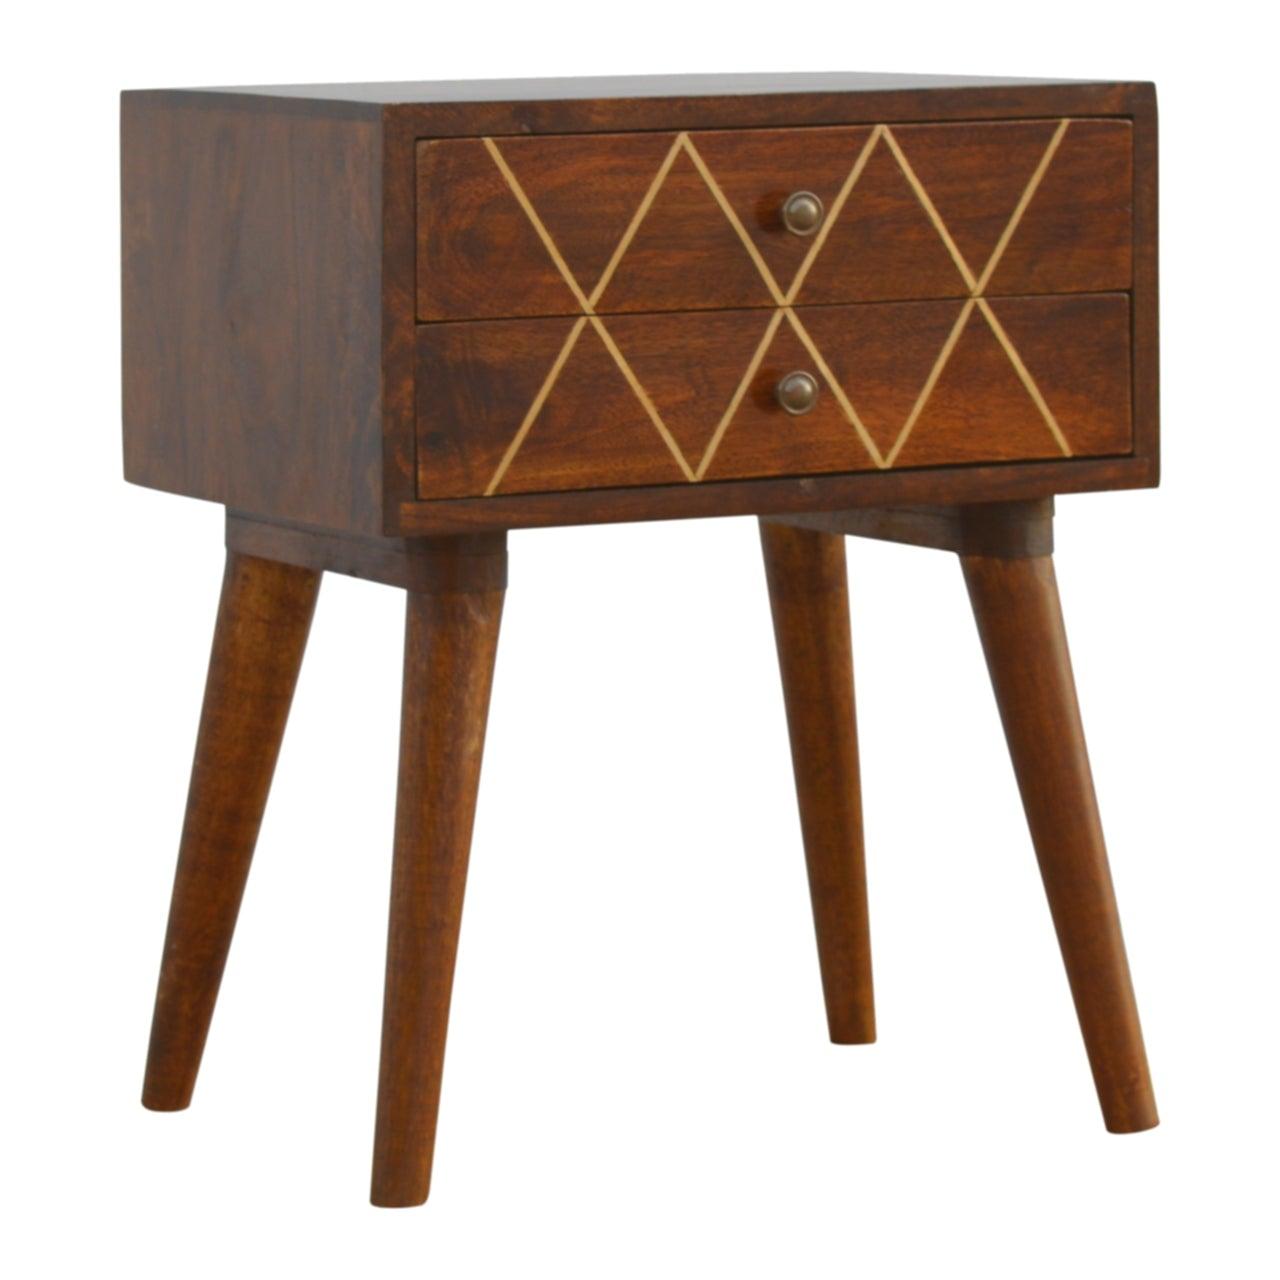 Geometric brass inlay 2 drawer bedside table - crimblefest furniture - image 2